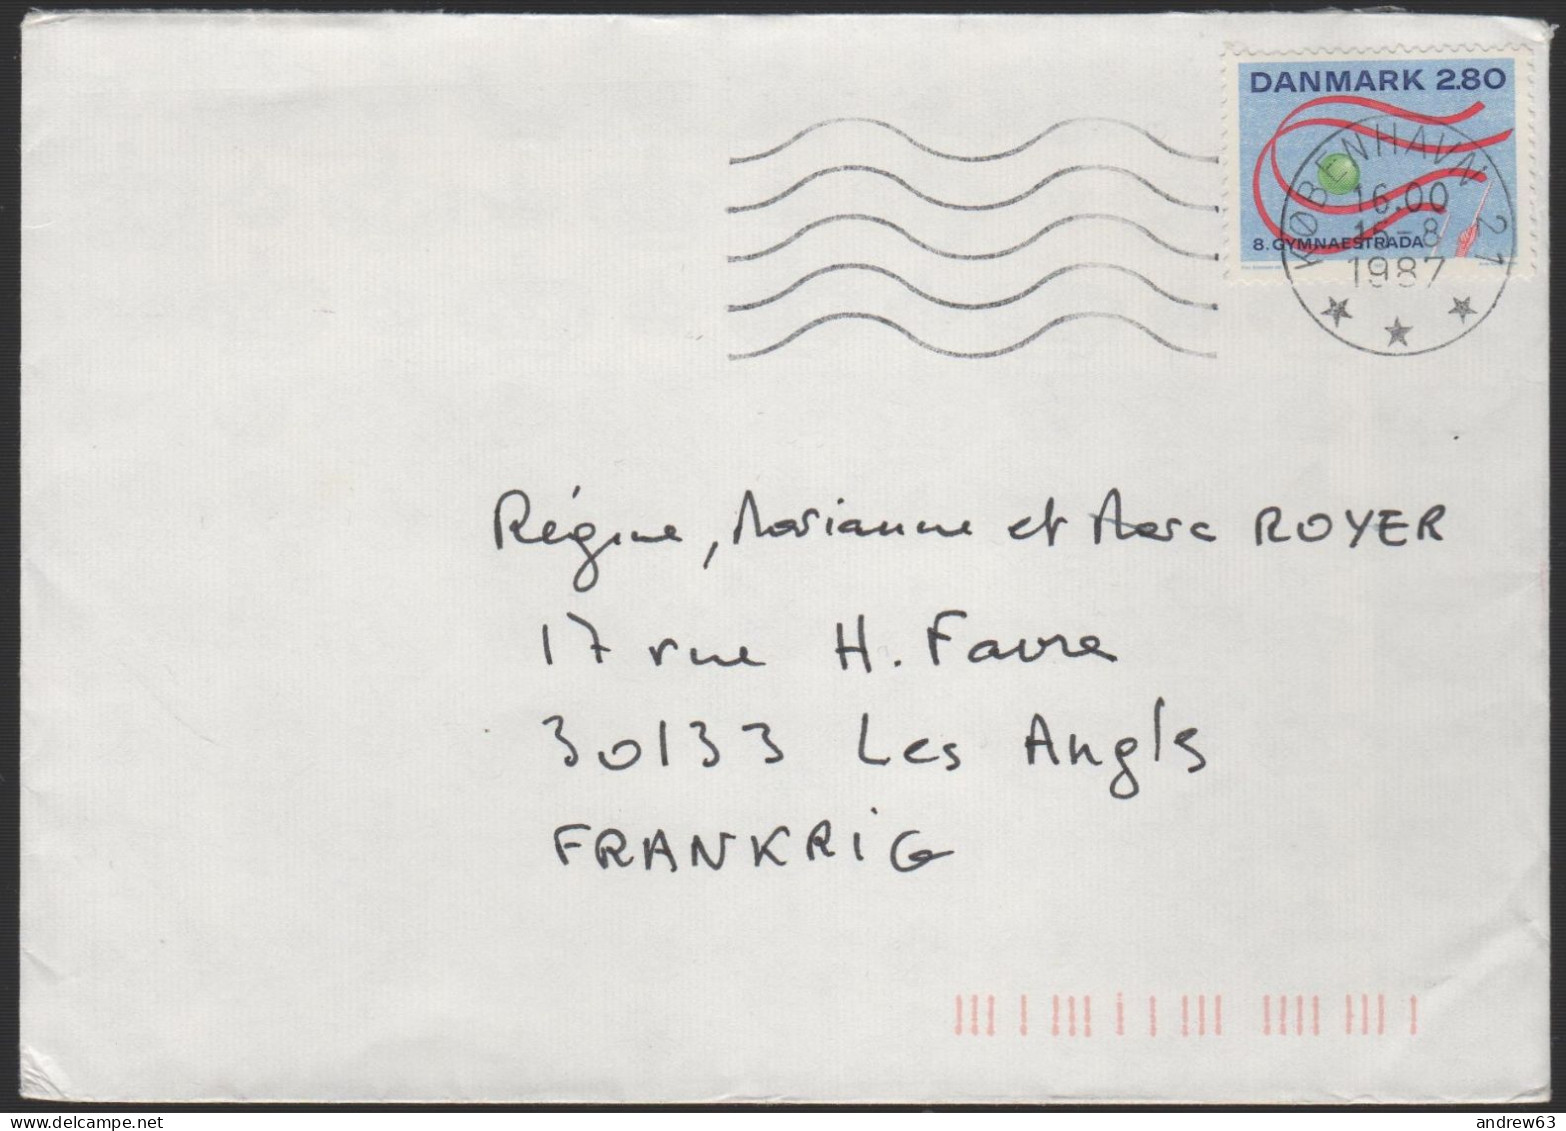 DANIMARCA - DANMARK - 1987 - 2,80 World Gymnastics Show - Viaggiata Da København Per Les Angles, France - Lettres & Documents